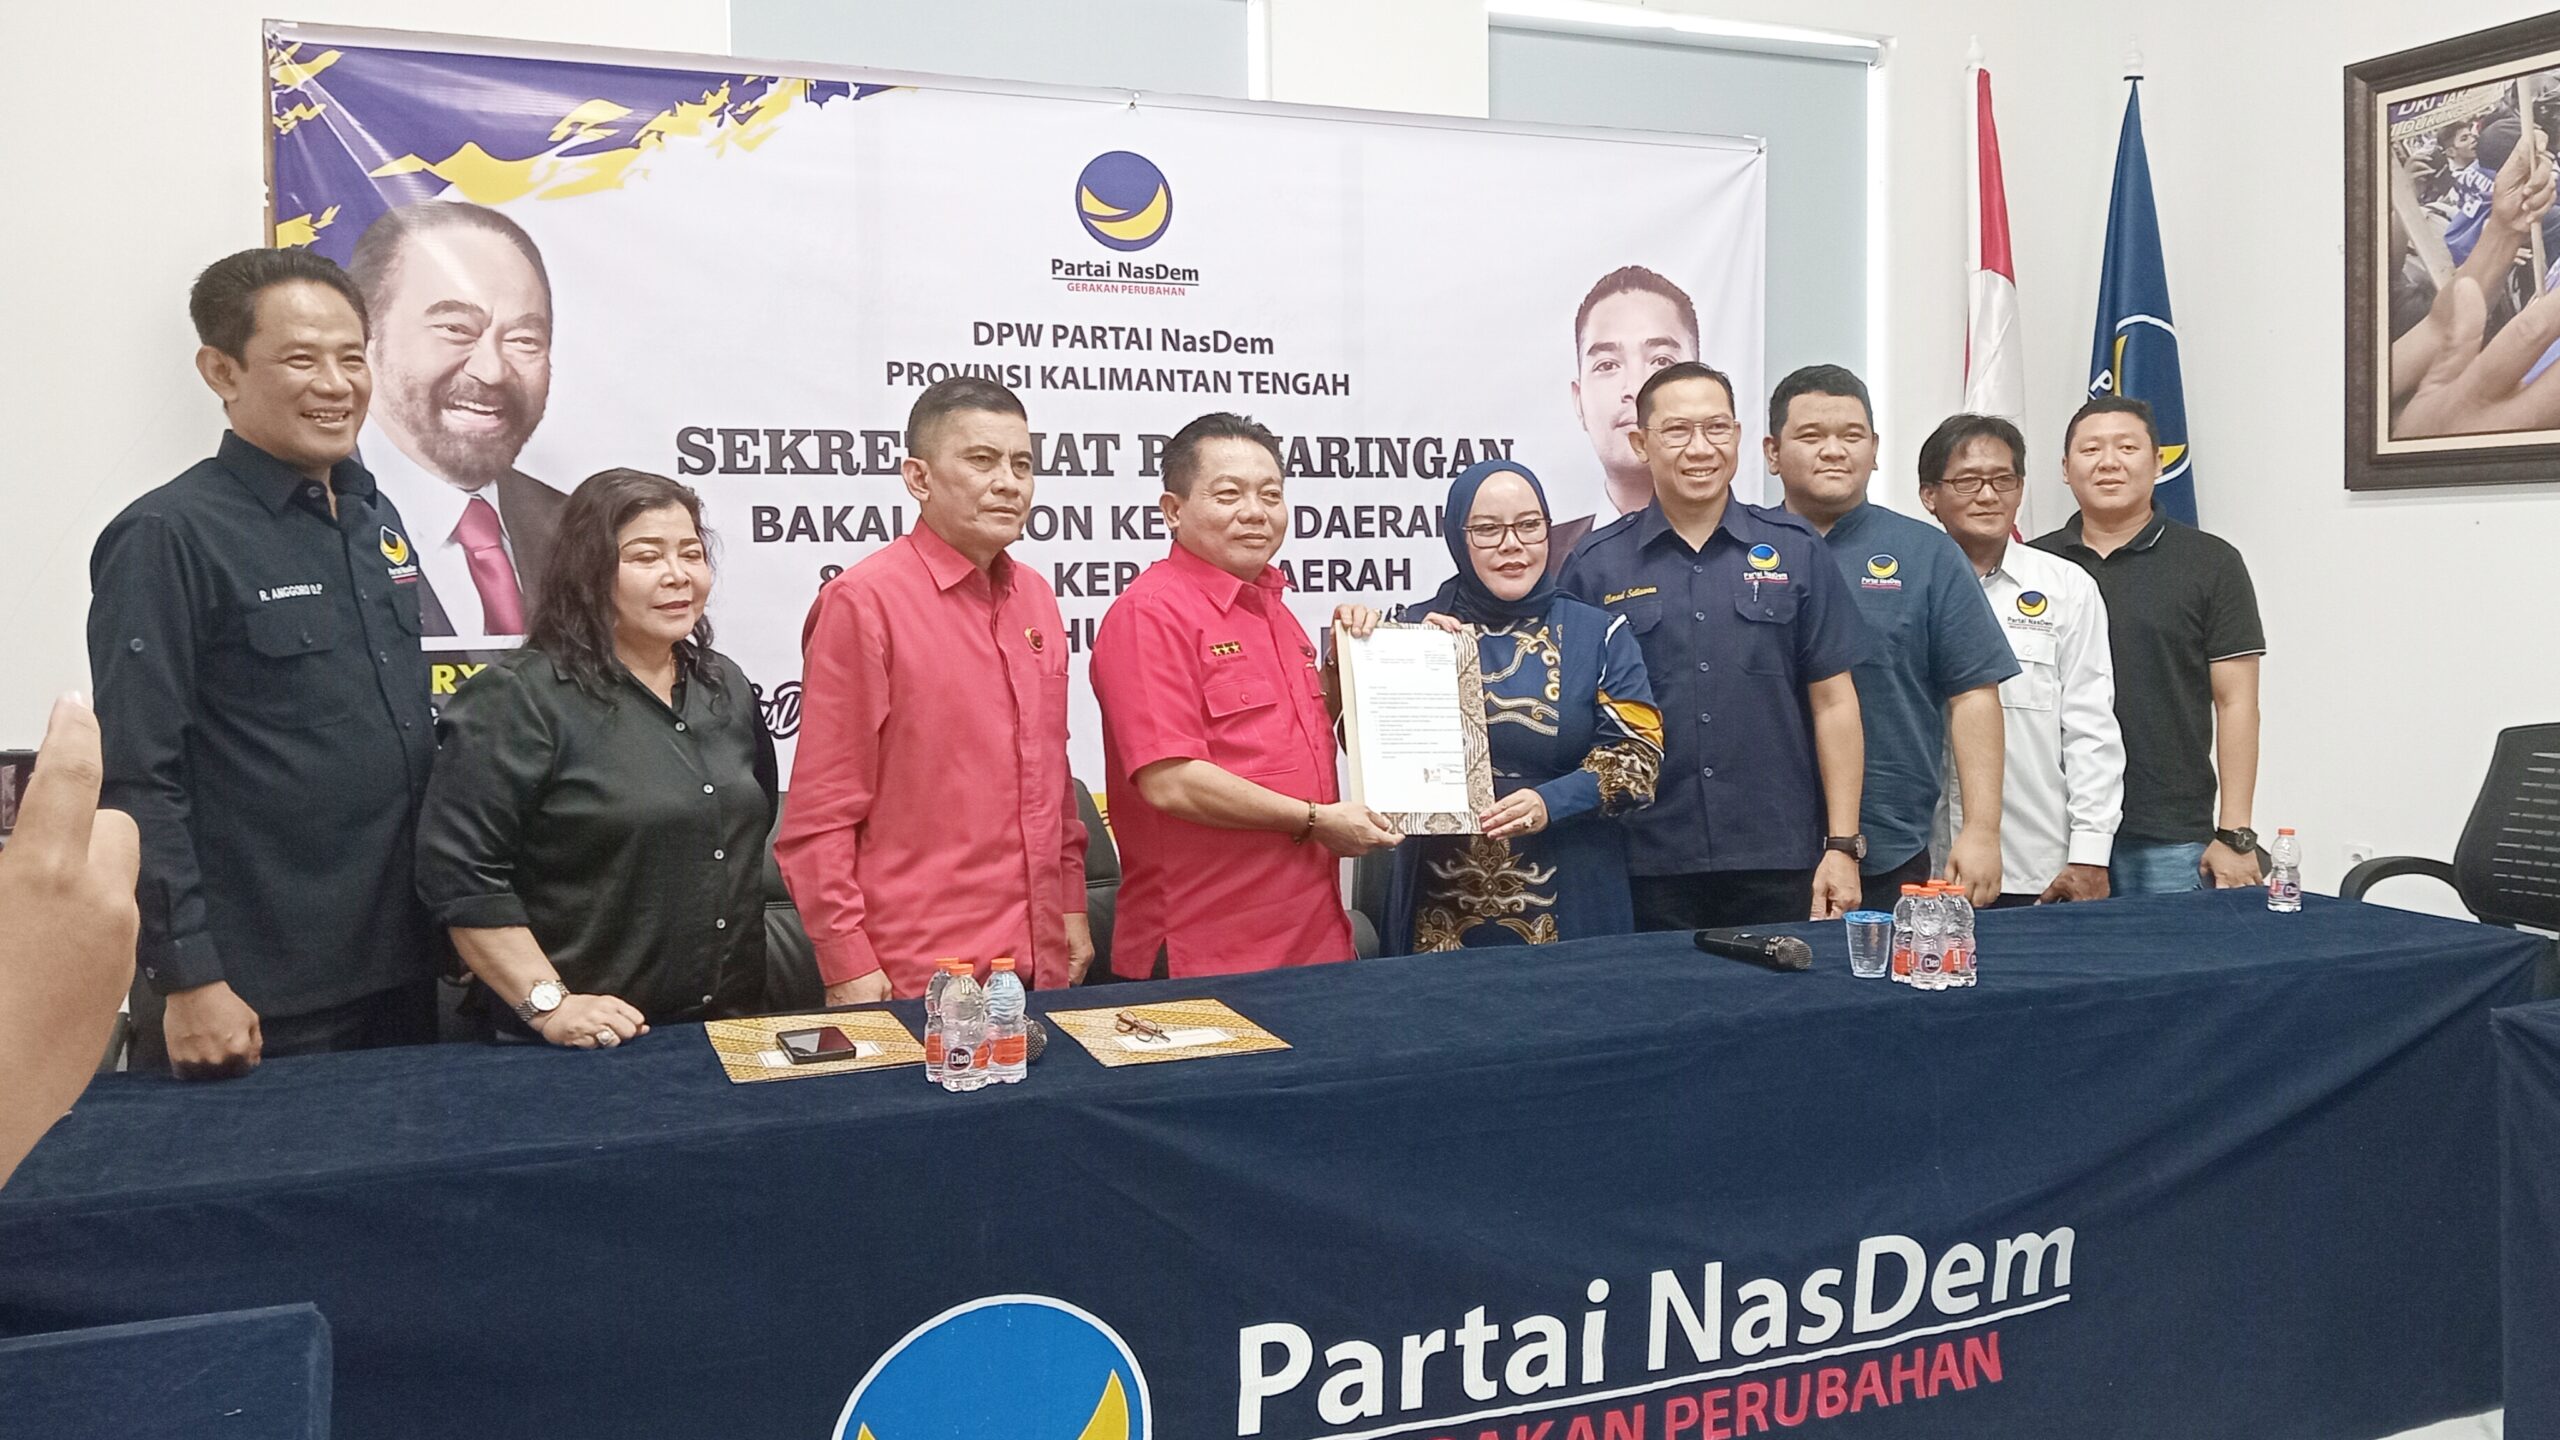 Hari Pertama Penjaringan, DPW Partai NasDem Kalteng Terima Dokumen Pendaftaran Wiyatno untuk PILBUP Kapuas 